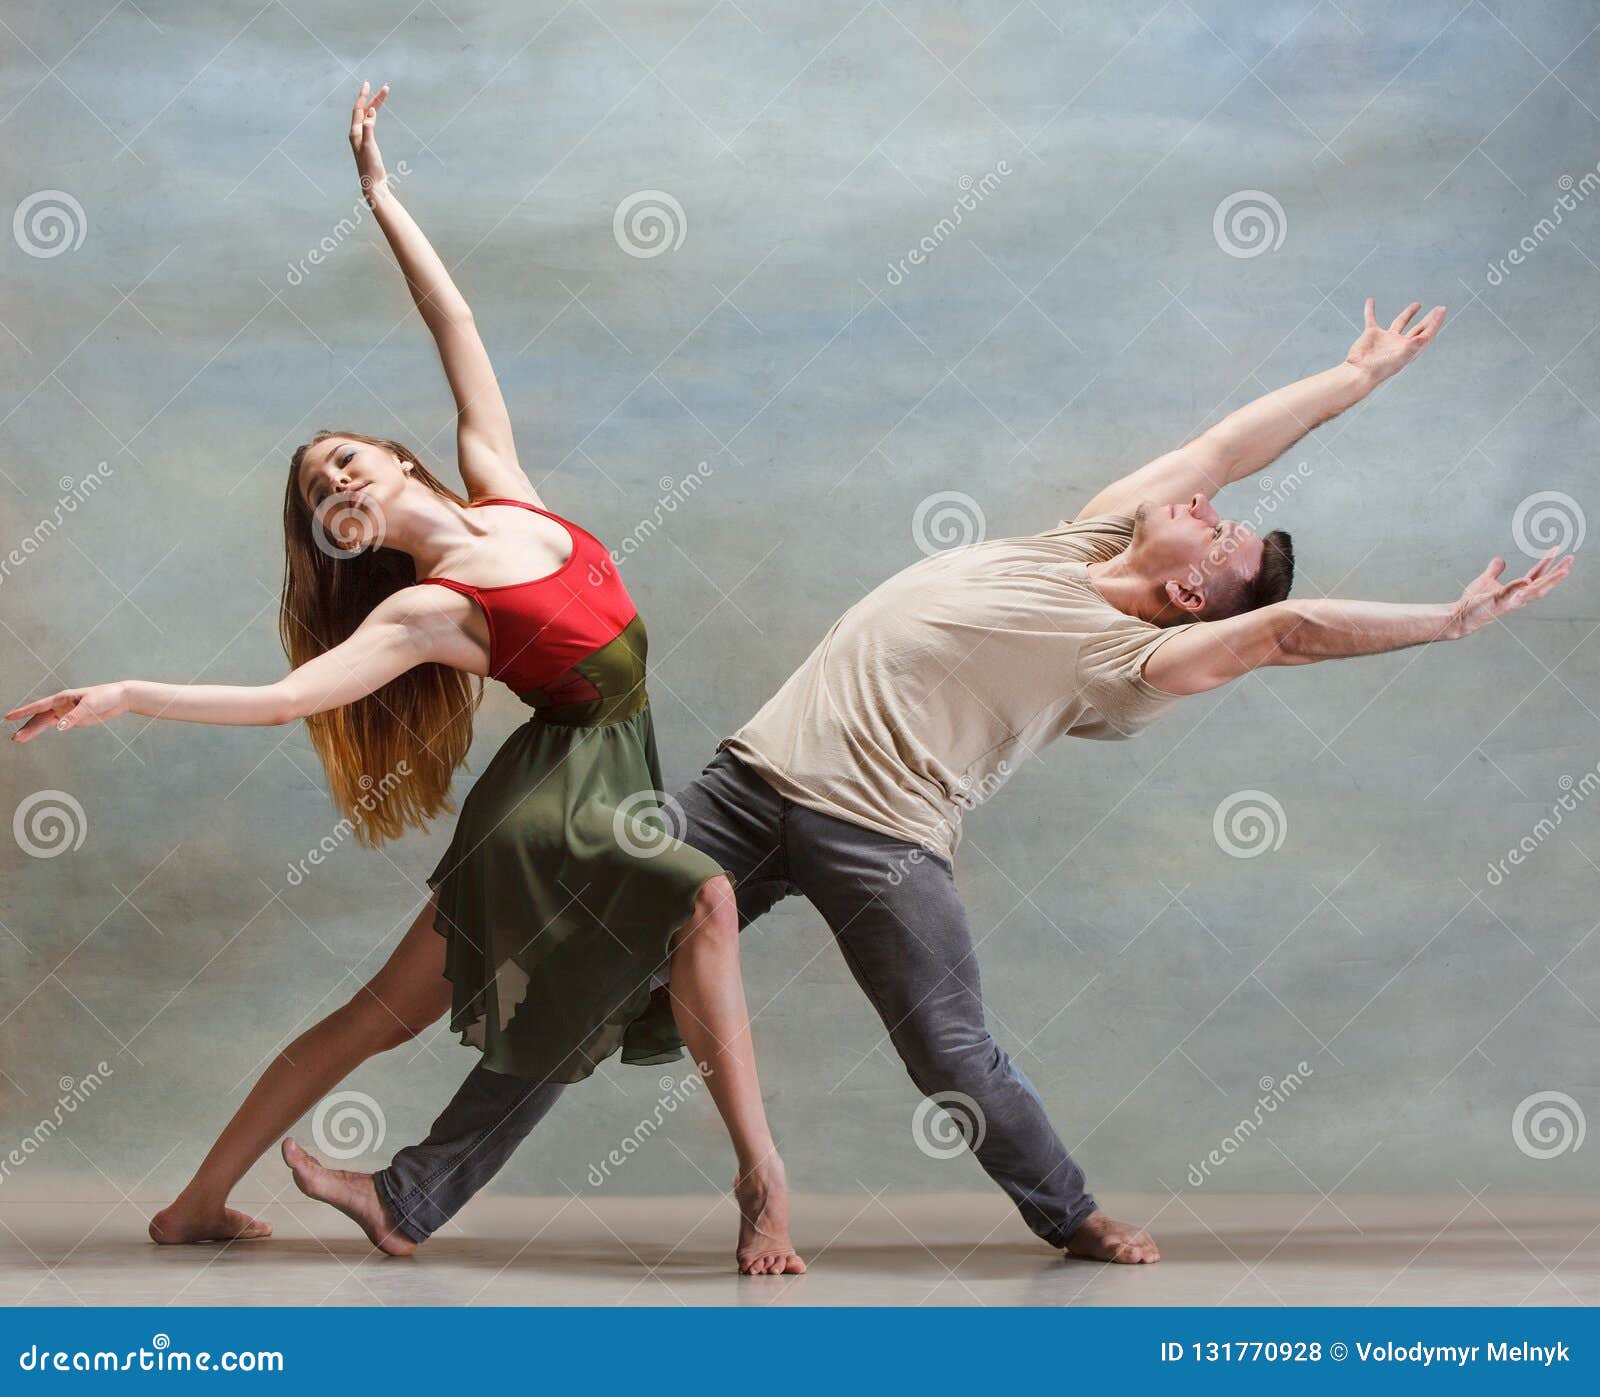 Page 43 | Modern Dance Poses Images - Free Download on Freepik